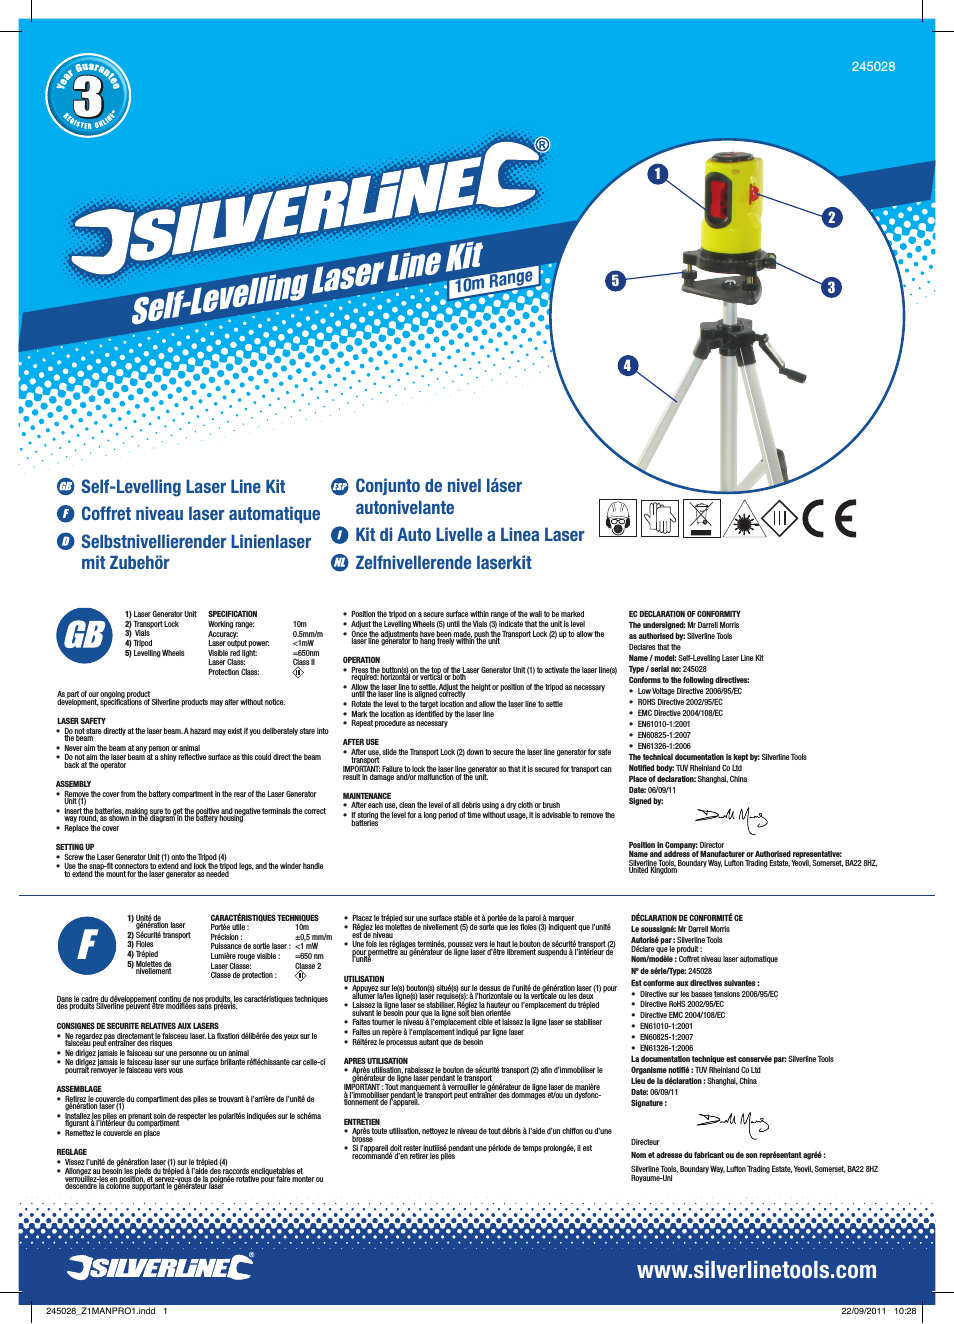 Self-Levelling Laser Level Kit